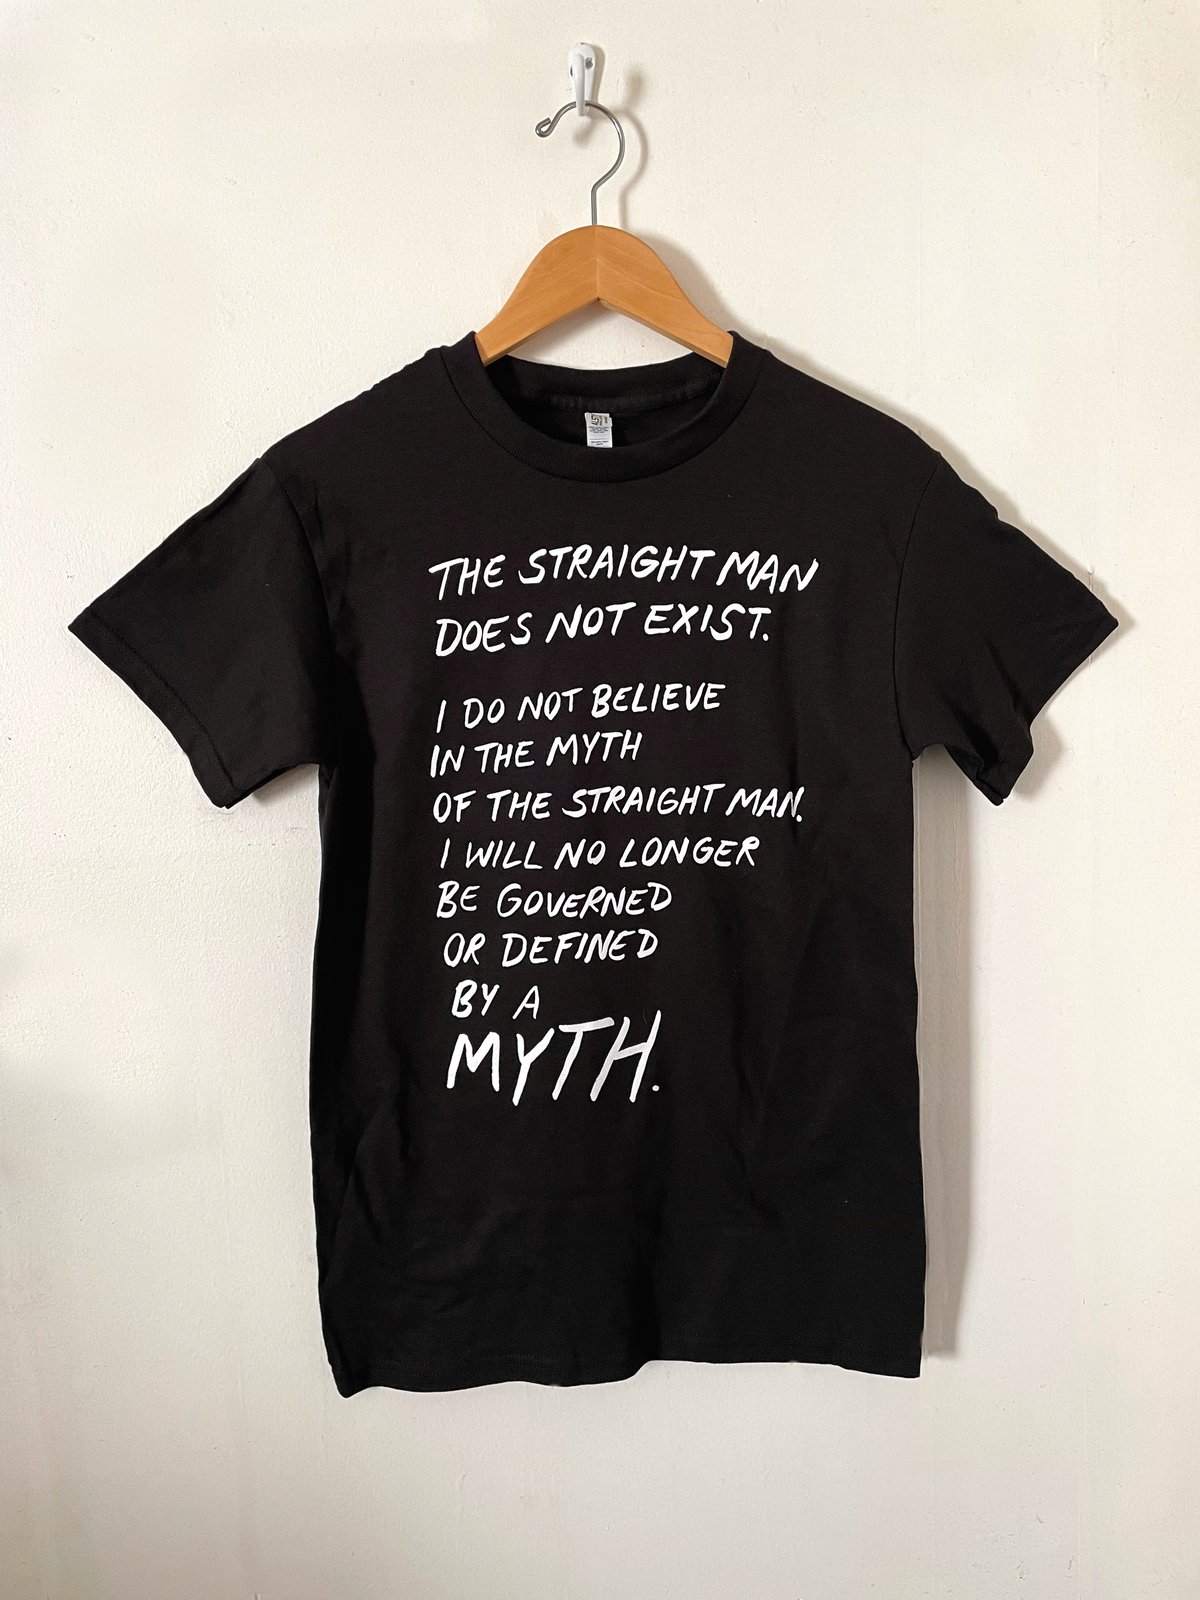 Image of "Myth of the Straight Man" T-shirt